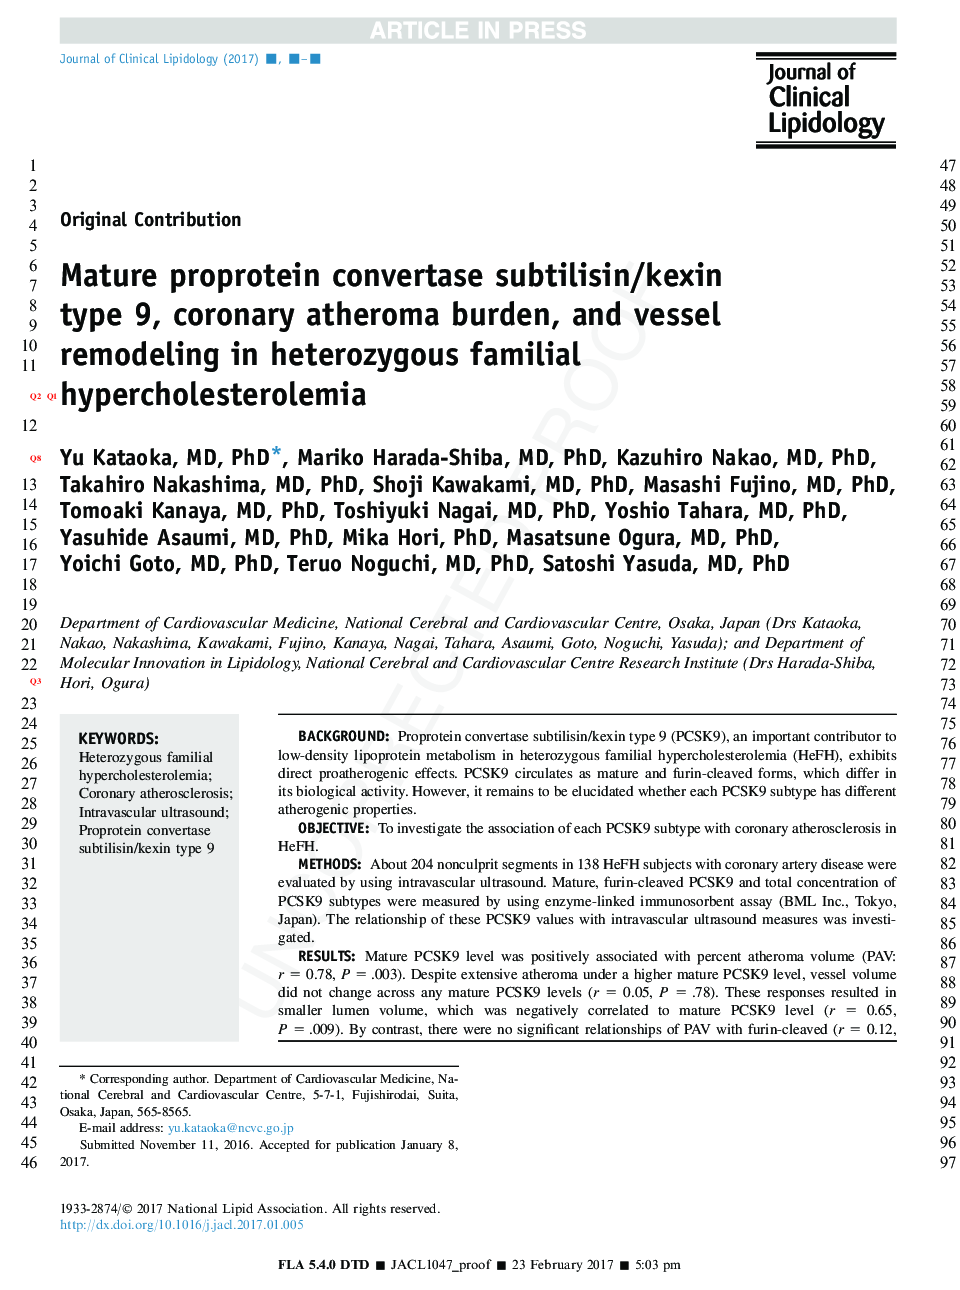 Mature proprotein convertase subtilisin/kexin type 9, coronary atheroma burden, and vessel remodeling in heterozygous familial hypercholesterolemia